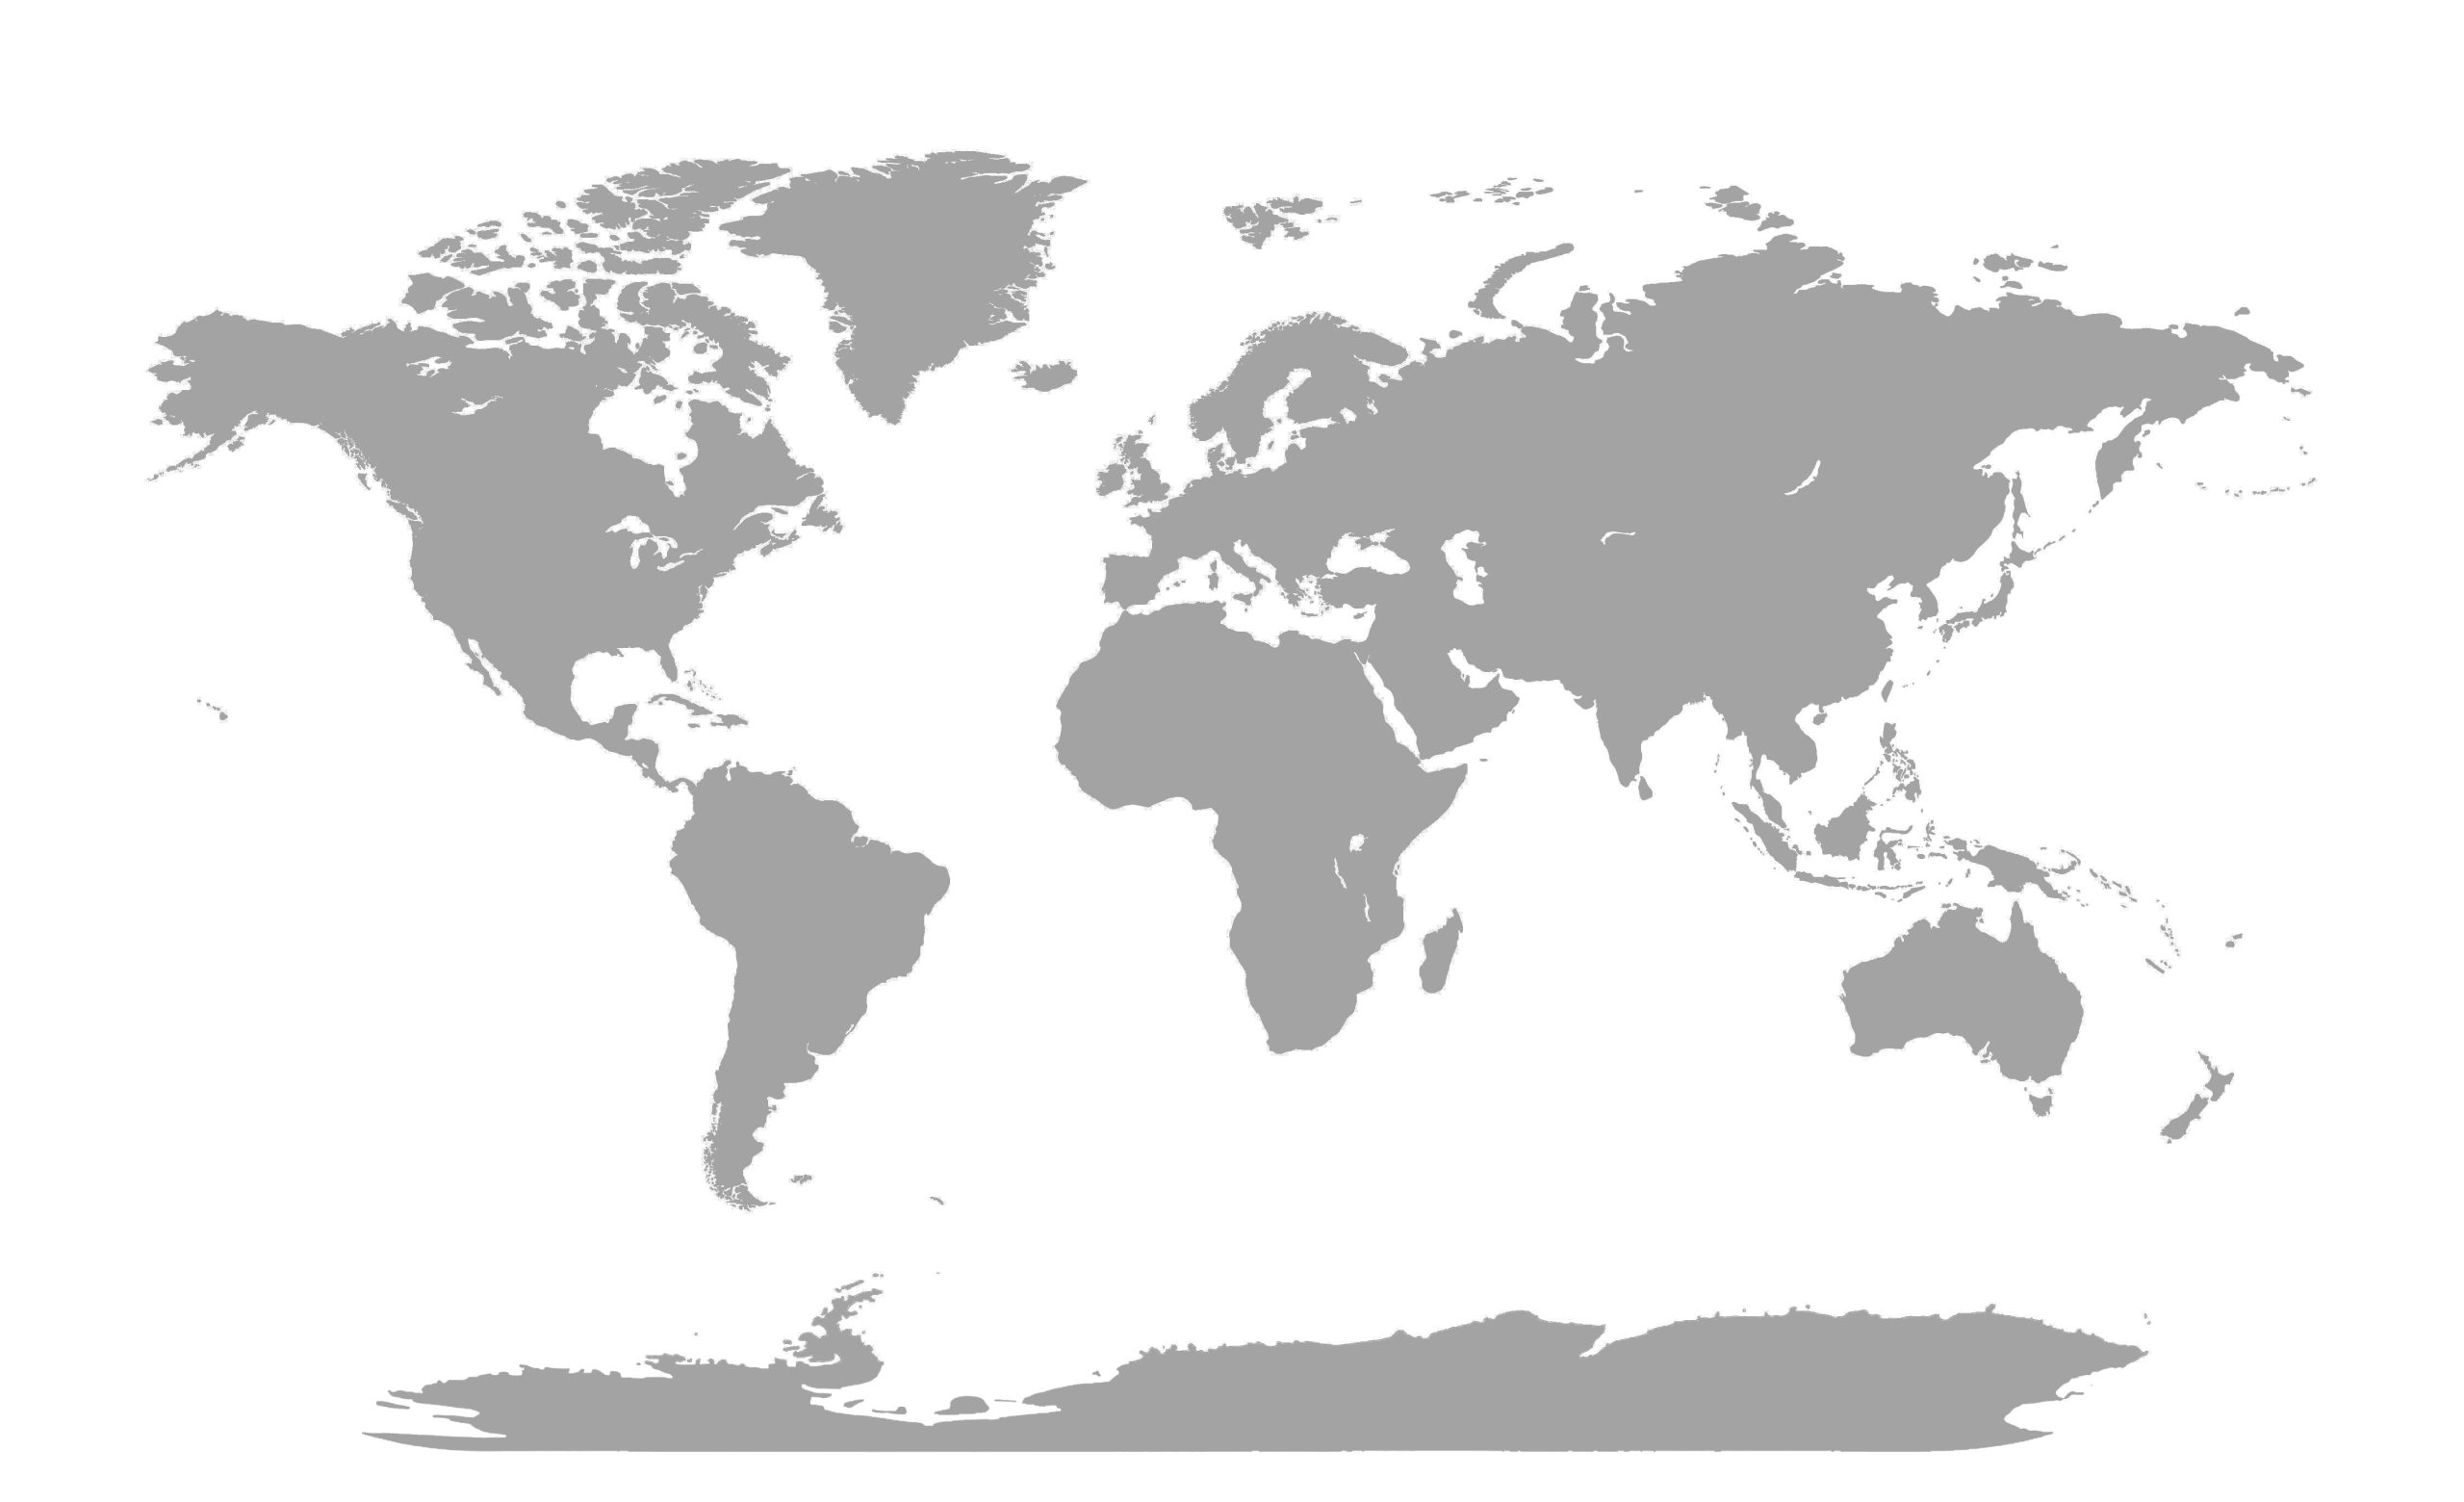 World Blank Map